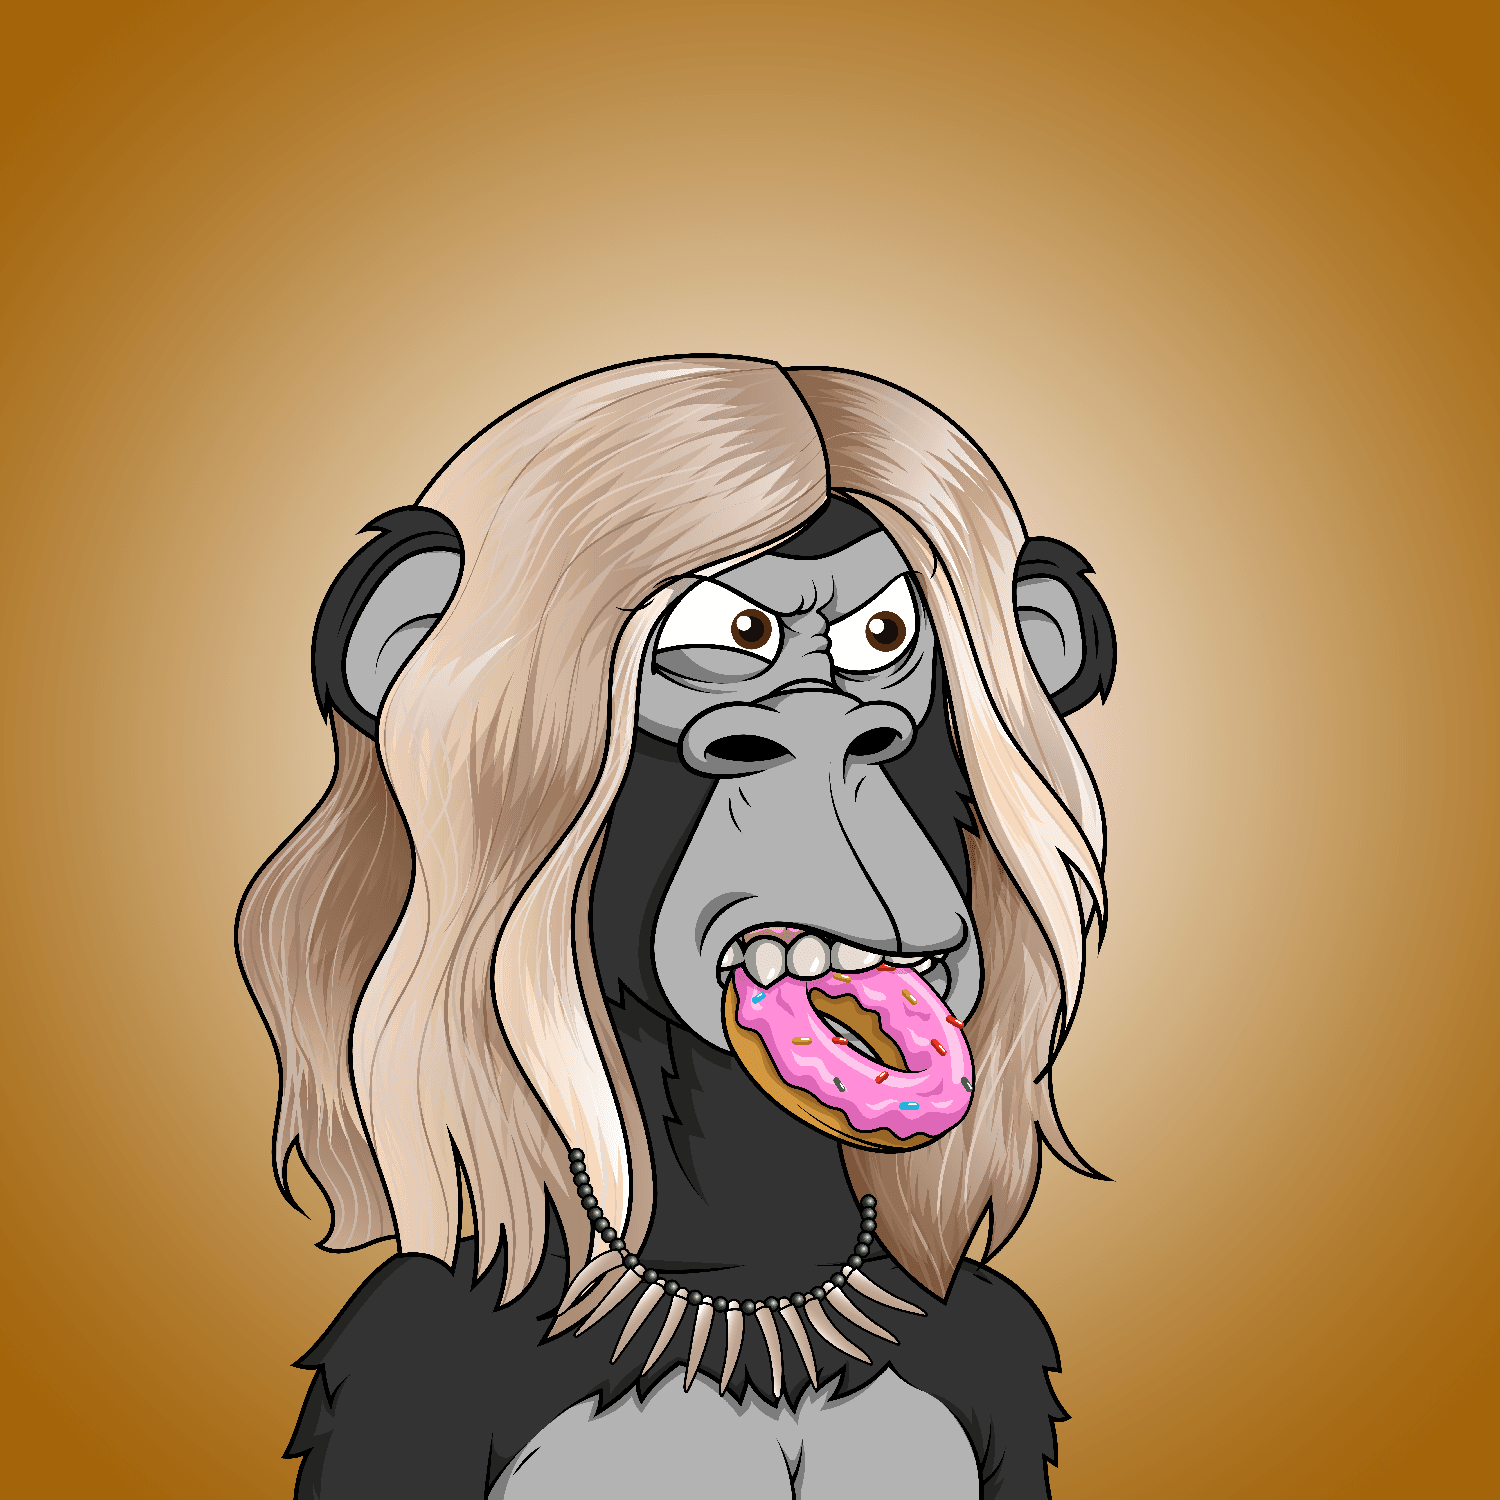 Stoned Ape #135